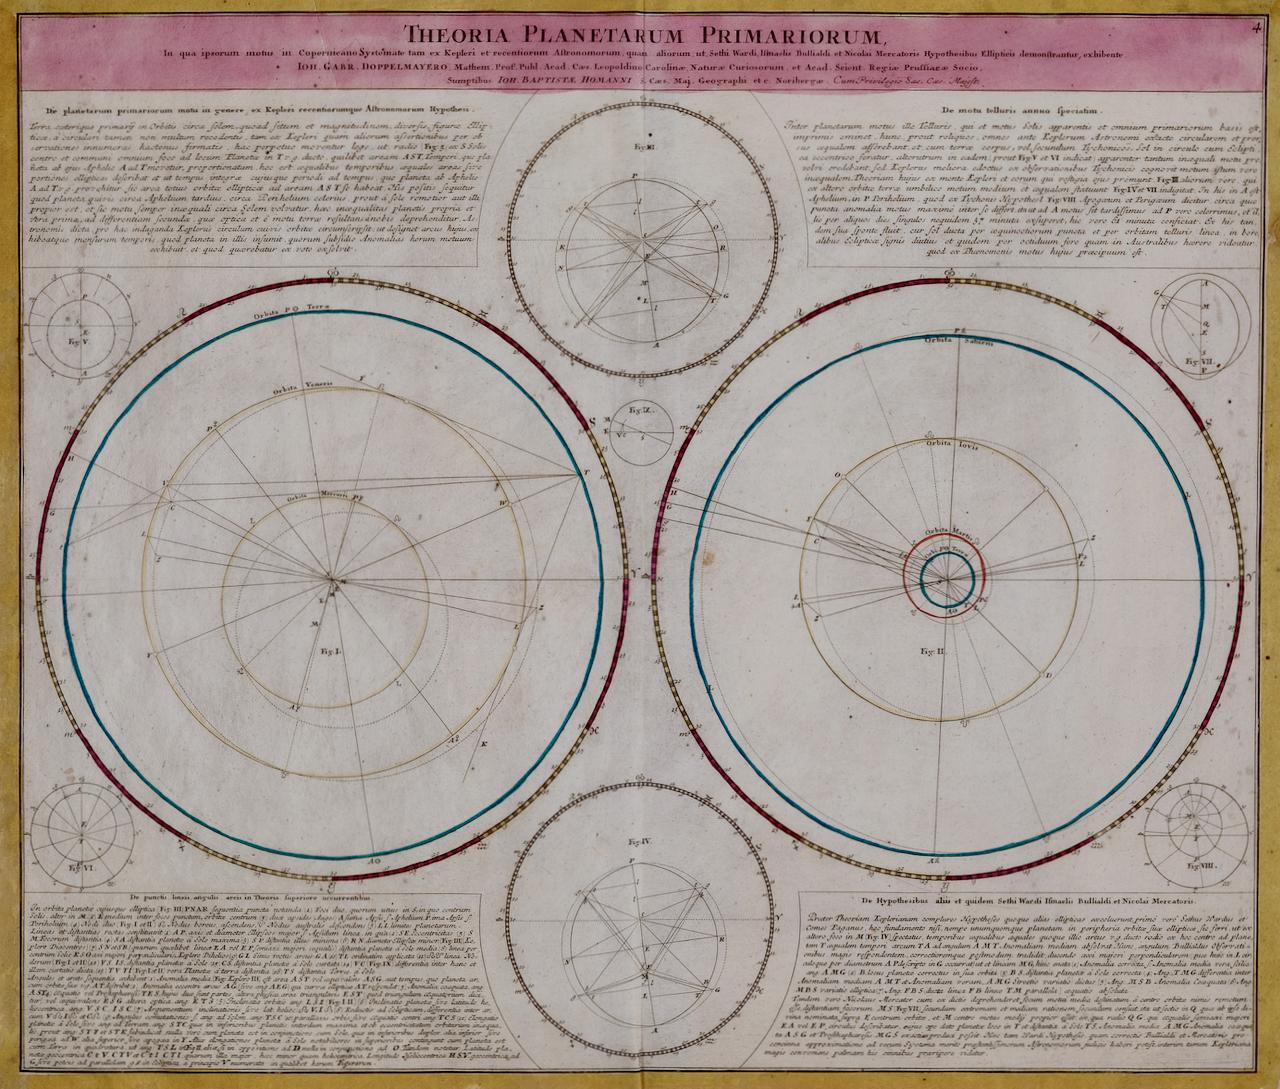 Theories of Planetary Motion: An 18th C. Framed Celestial Map by Doppelmayr - Print by Johann Gabriel Doppelmayr